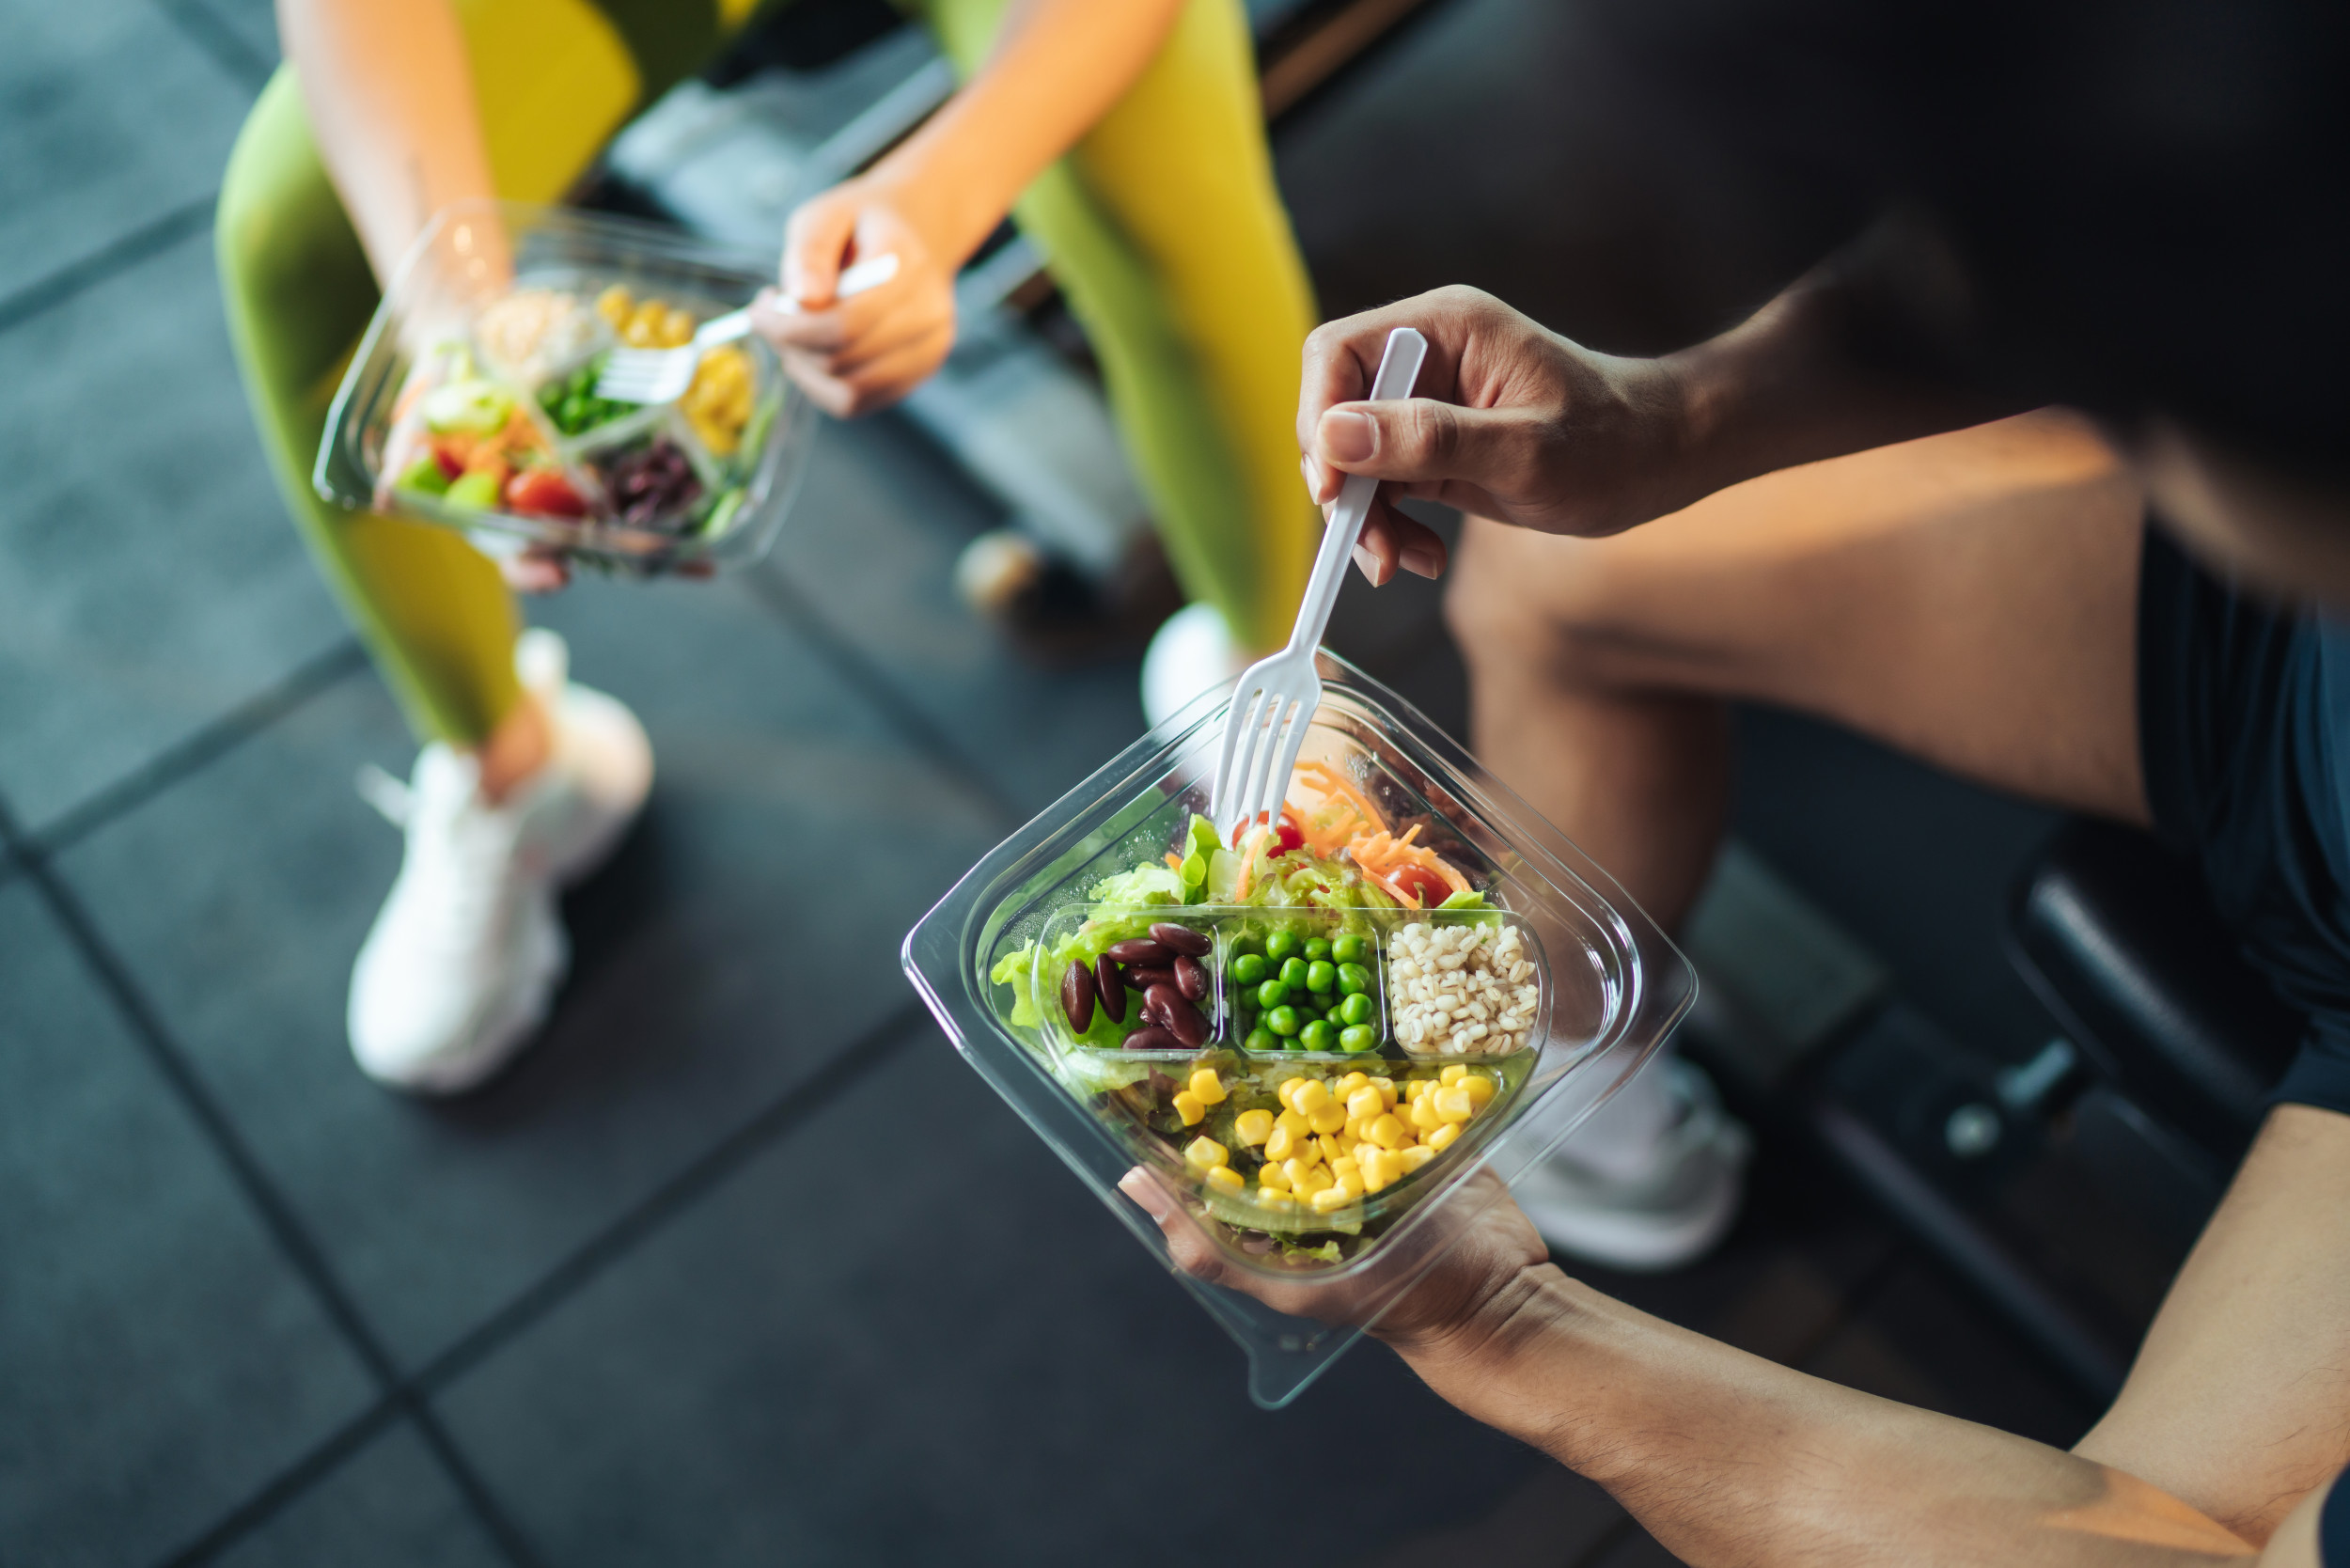 Healthiest Menu Items at Fast Food Restaurants